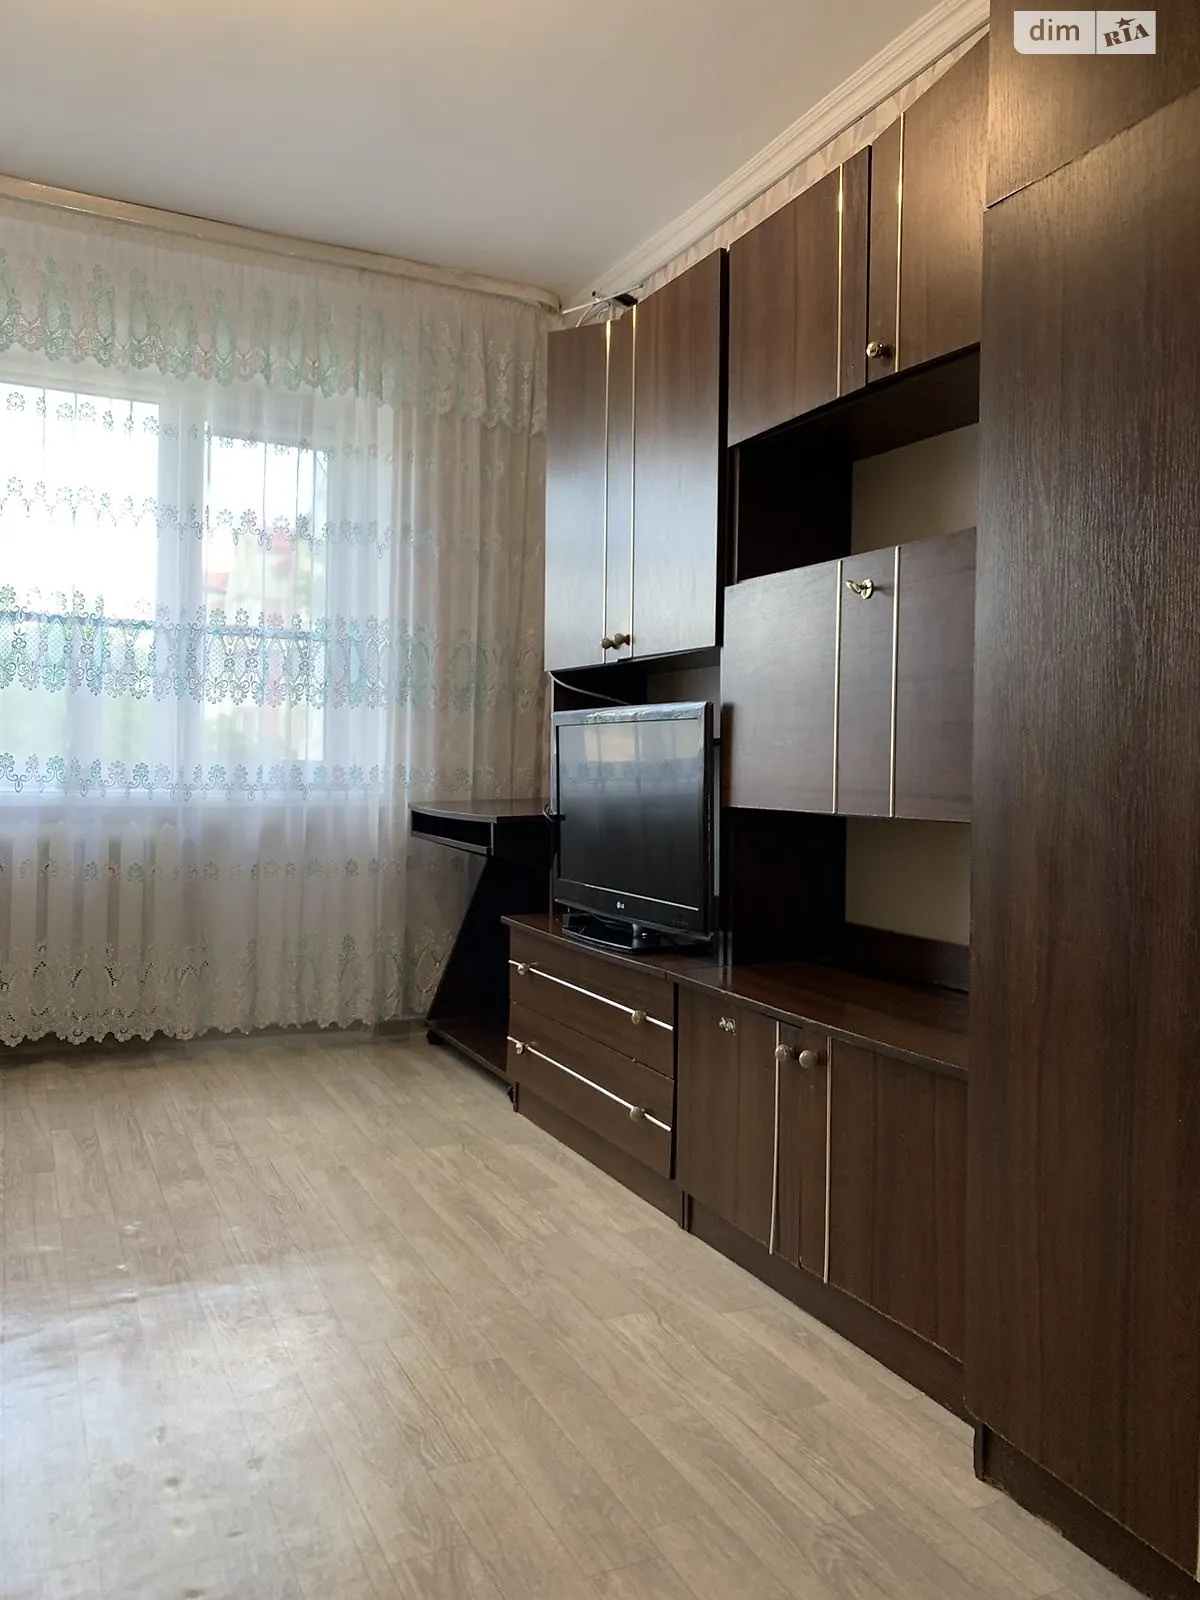 Продается комната 17 кв. м в Тернополе - фото 3